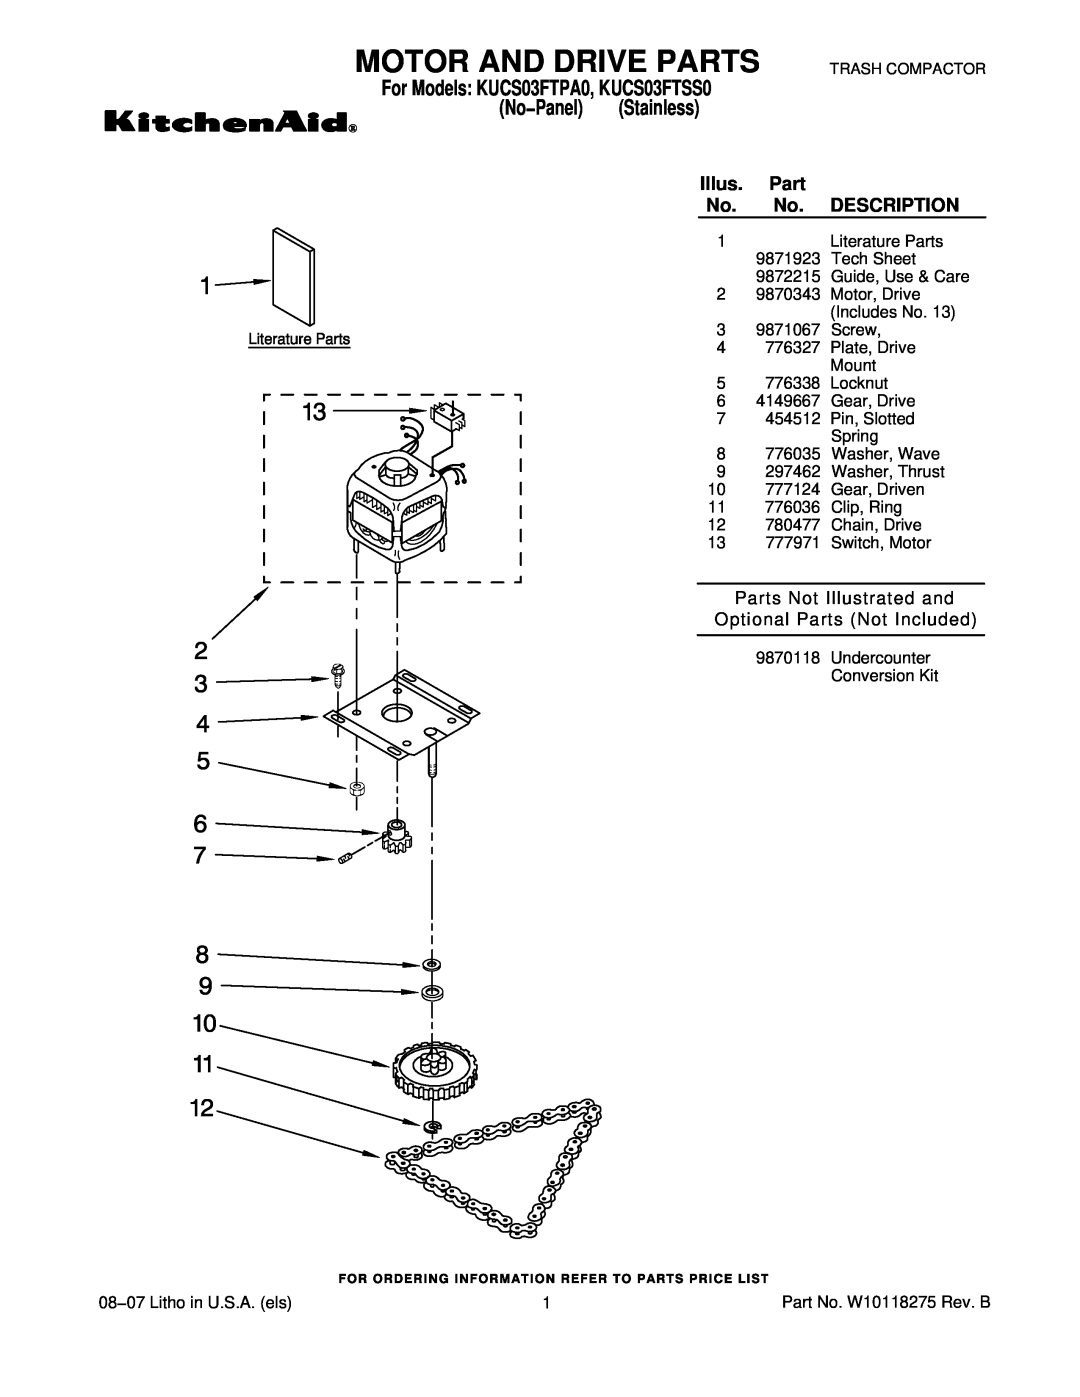 KitchenAid manual Motor And Drive Parts, No−Panel, Illus, Description, For Models KUCS03FTPA0, KUCS03FTSS0 